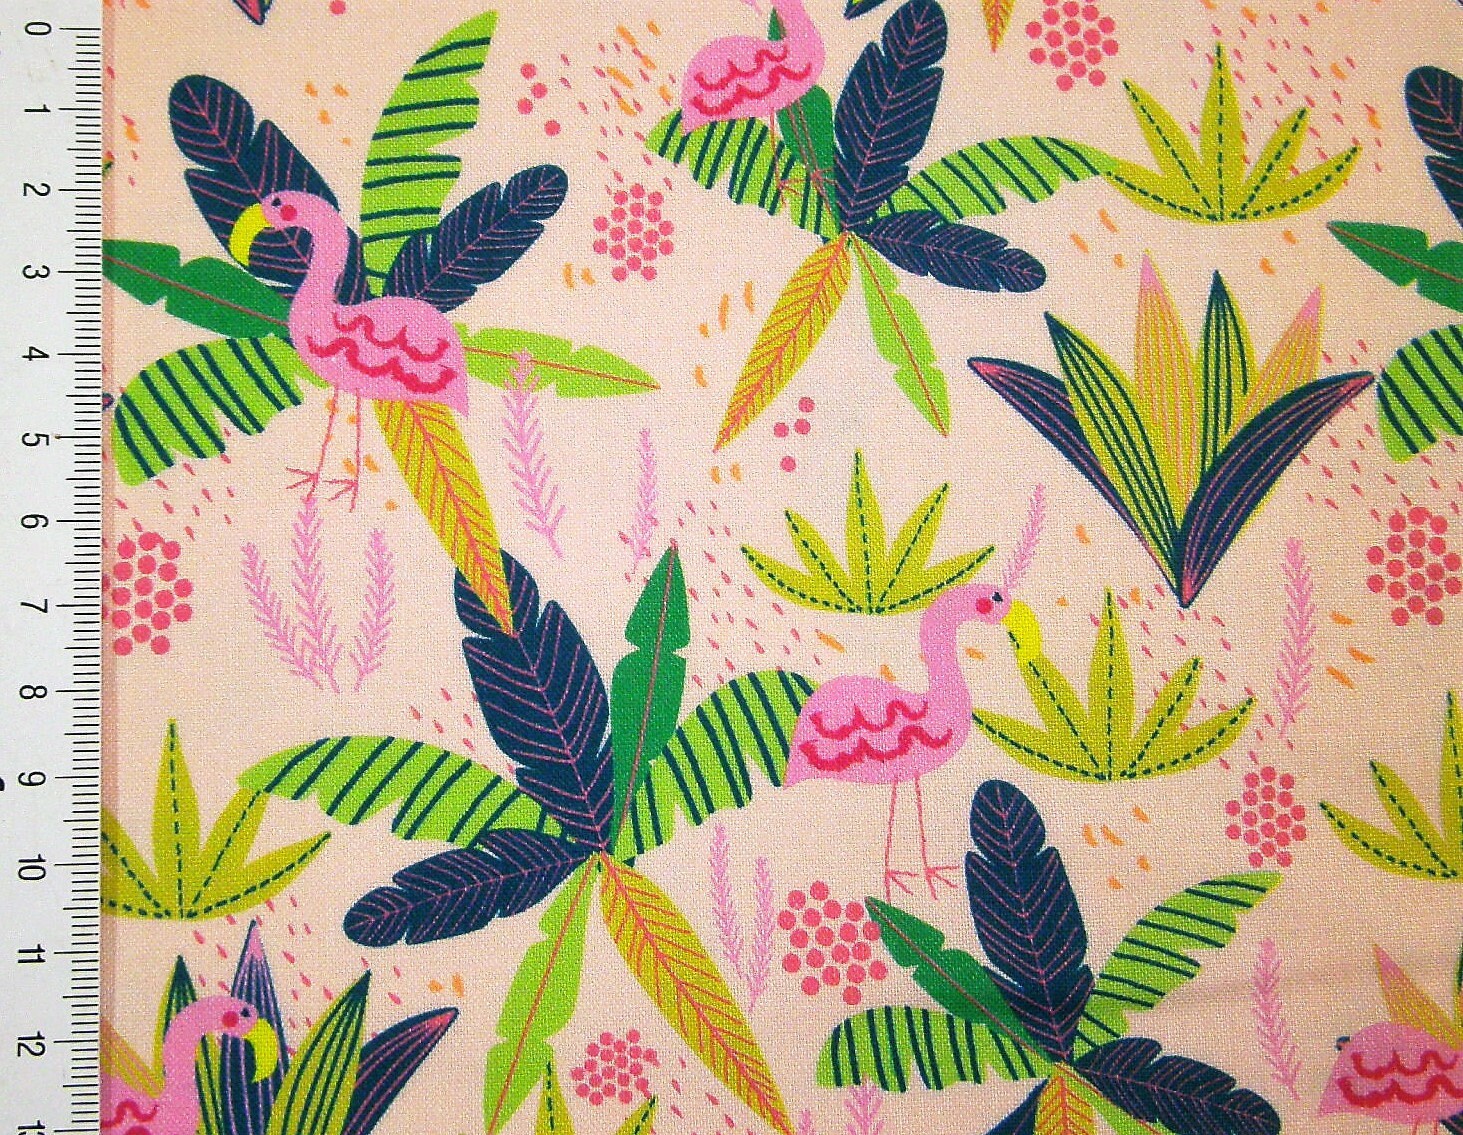 06 m Printed fabric Junglemania 110 cm w. | Etsy